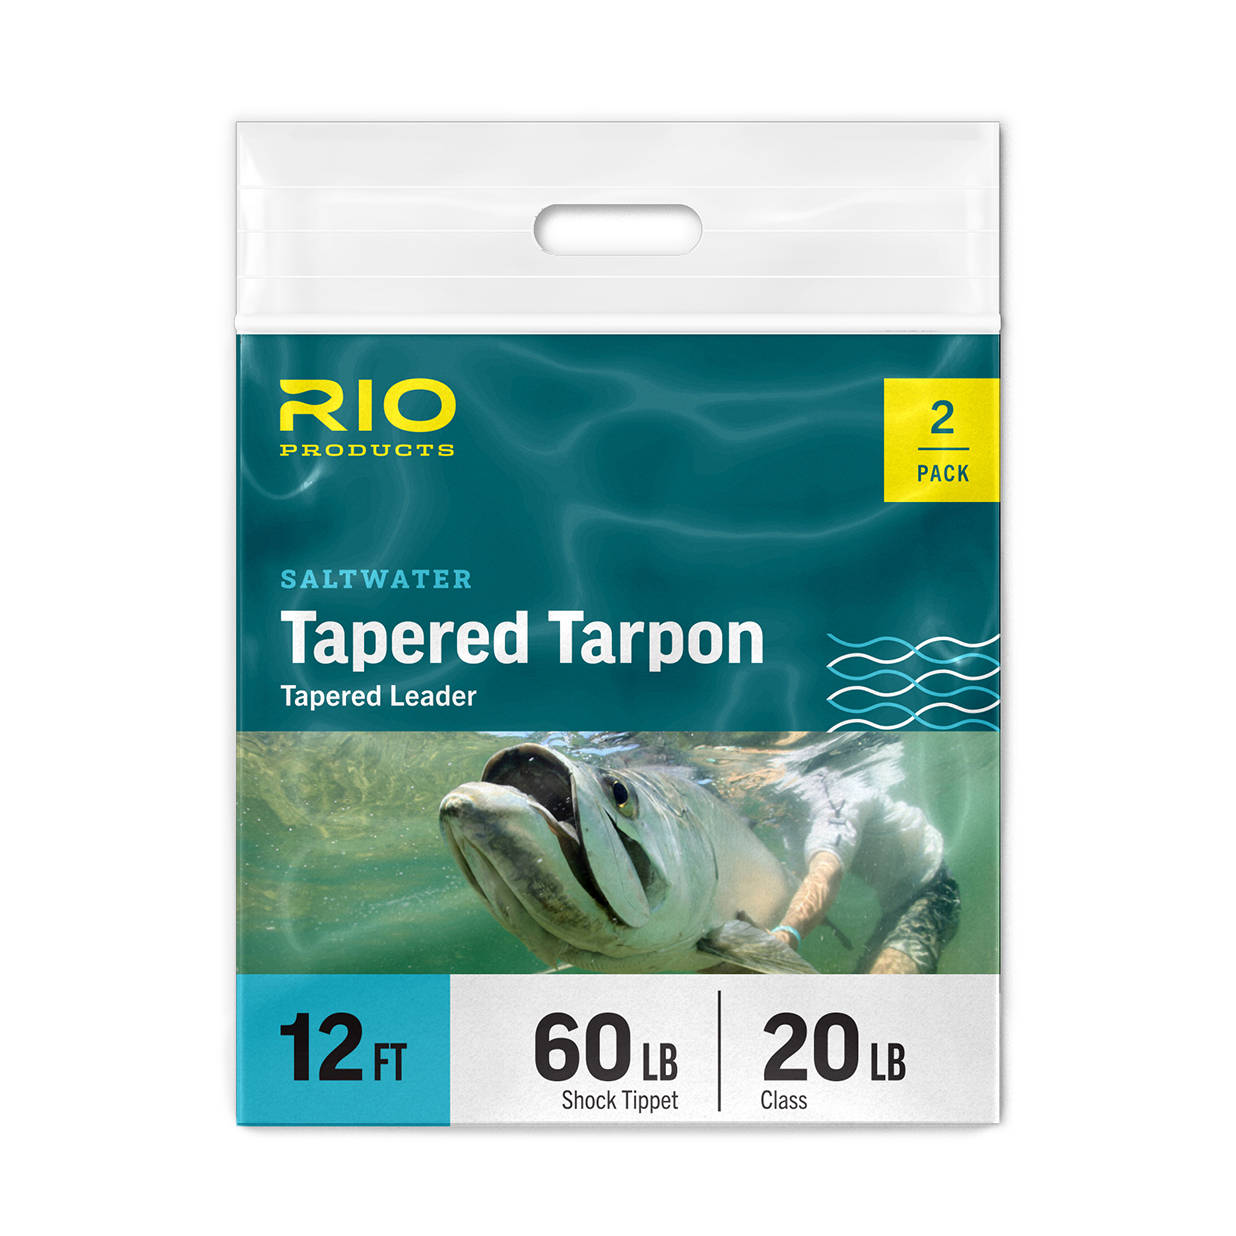 RIO Tapered Tarpon Leaders – Guide Flyfishing